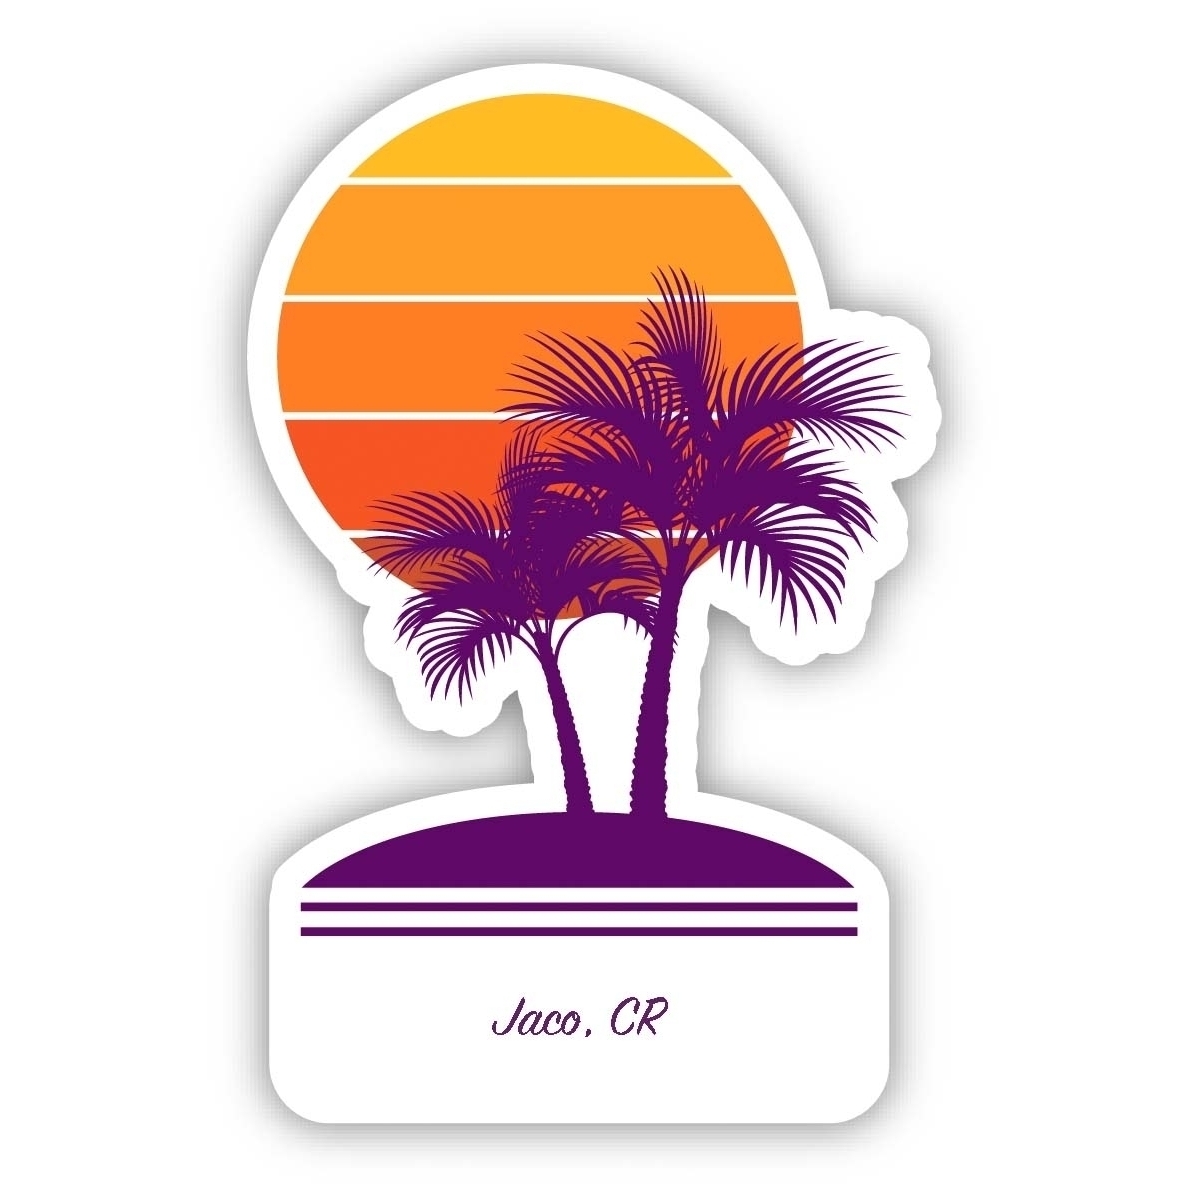 Jaco Costa Rica Souvenir 4 Inch Vinyl Decal Sticker Palm Design